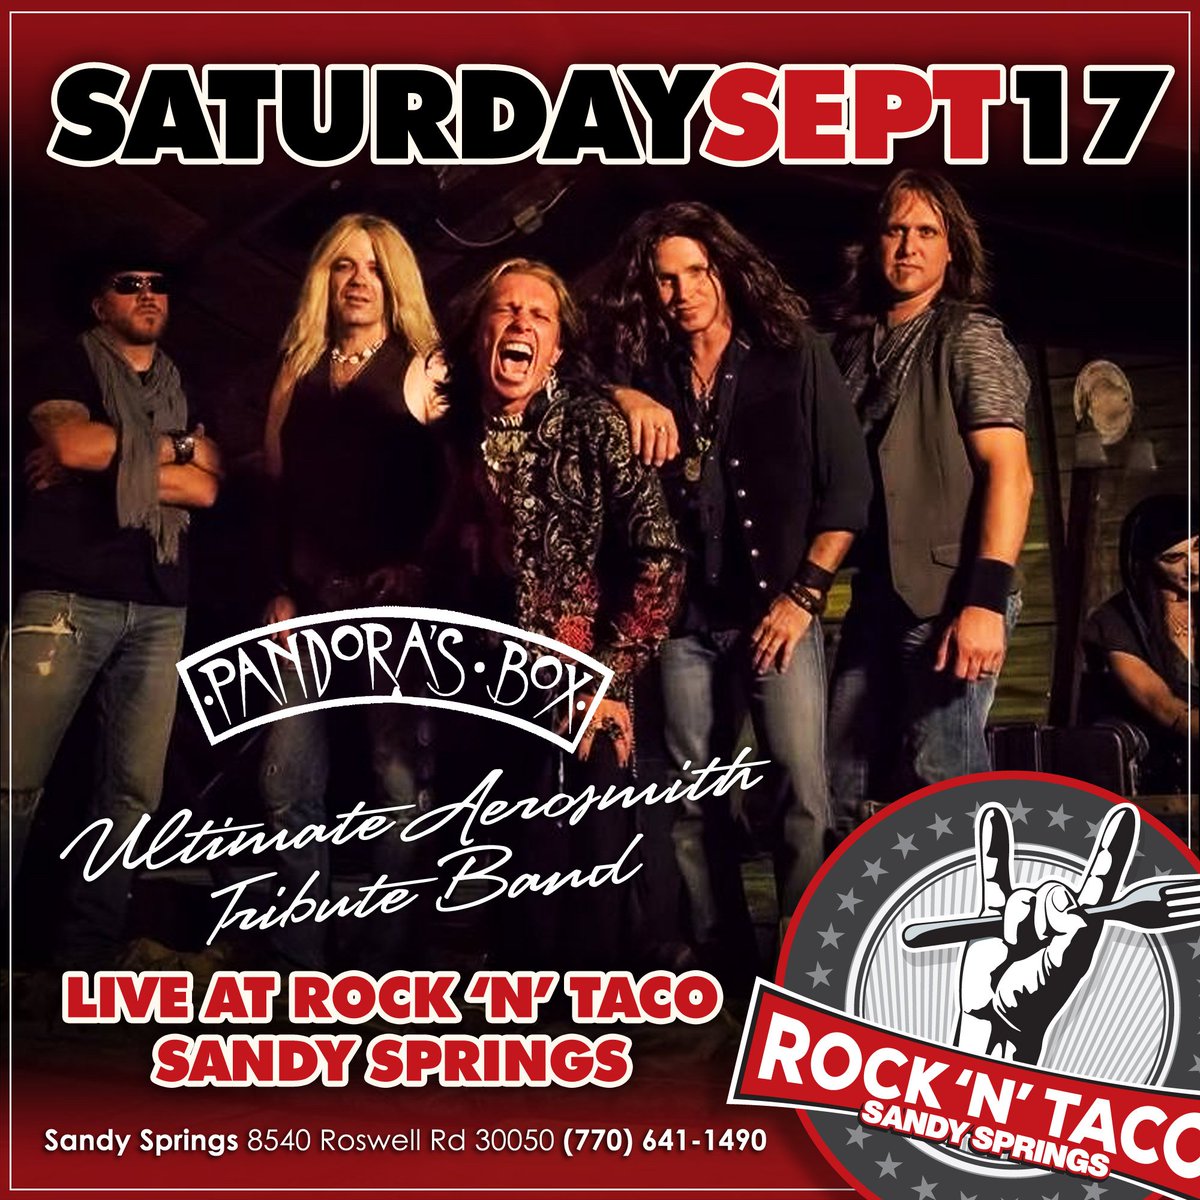 rock n taco on Twitter: "Pandora's Box - Ultimate Aerosmith Tribute Band at Rock 'N' Taco Sandy Springs TONIGHT! https://t.co/o18Q0H2QR9" / Twitter